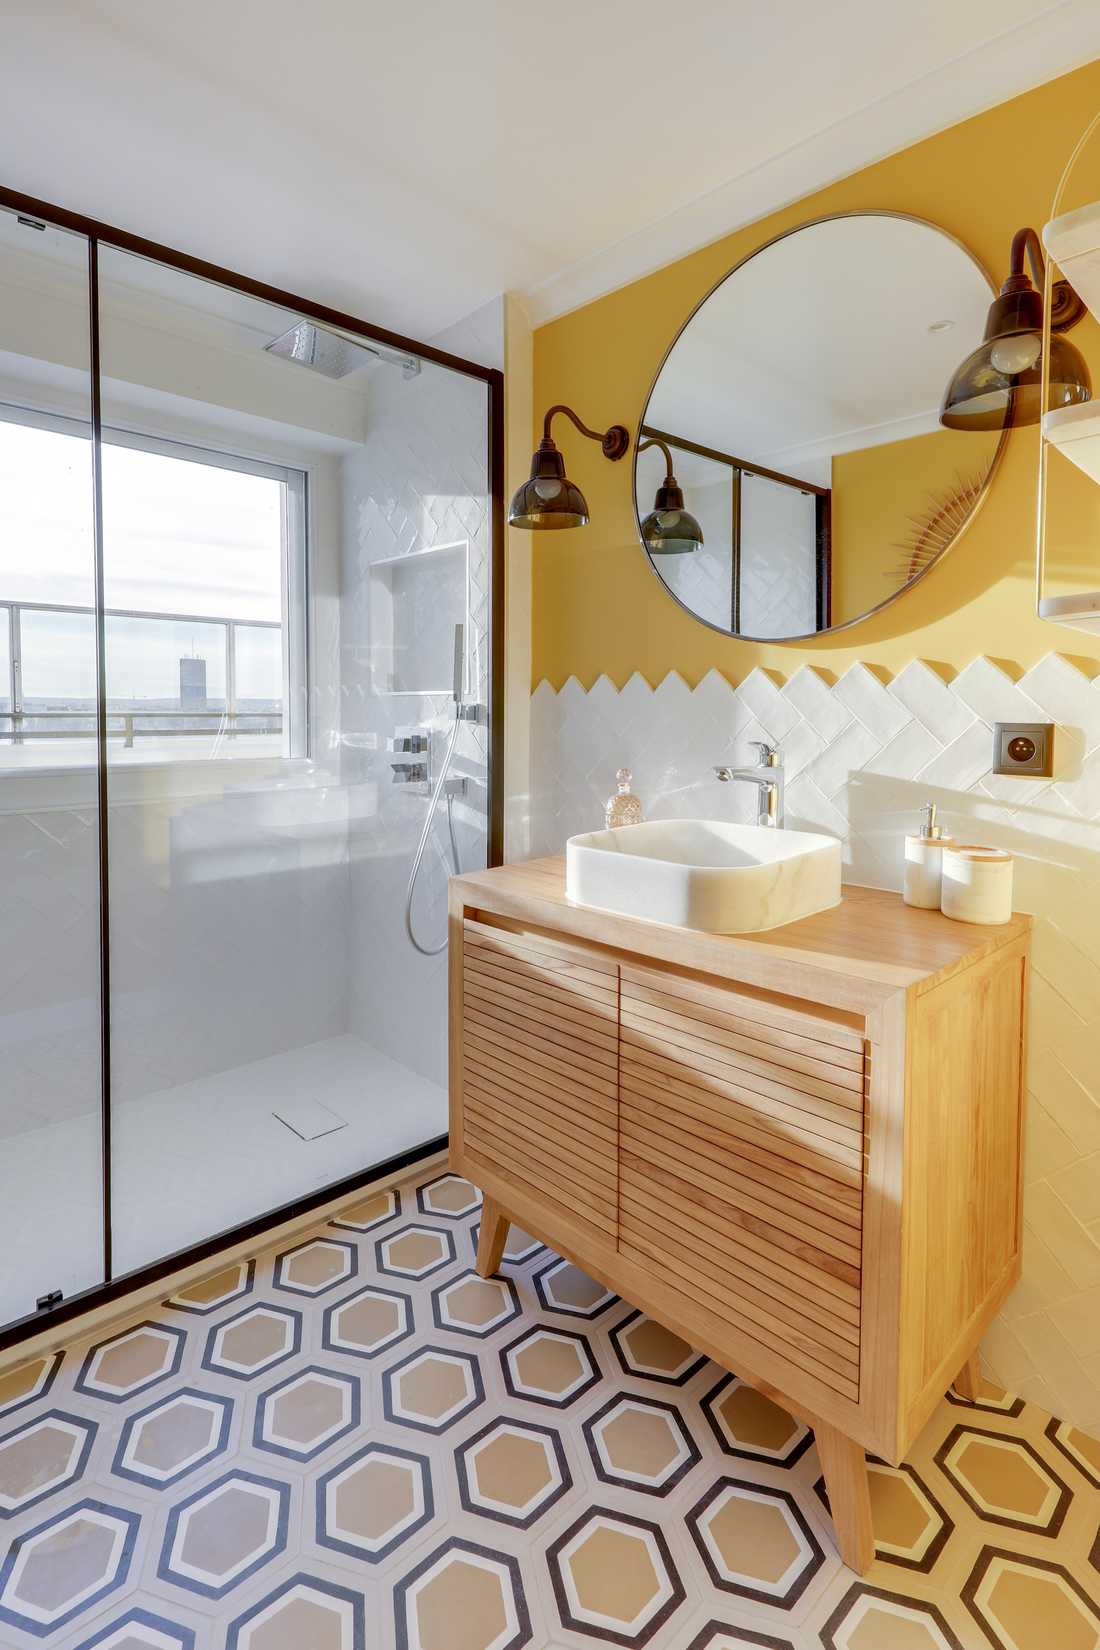 Salle de bain moderne avec une peinture jaune safran